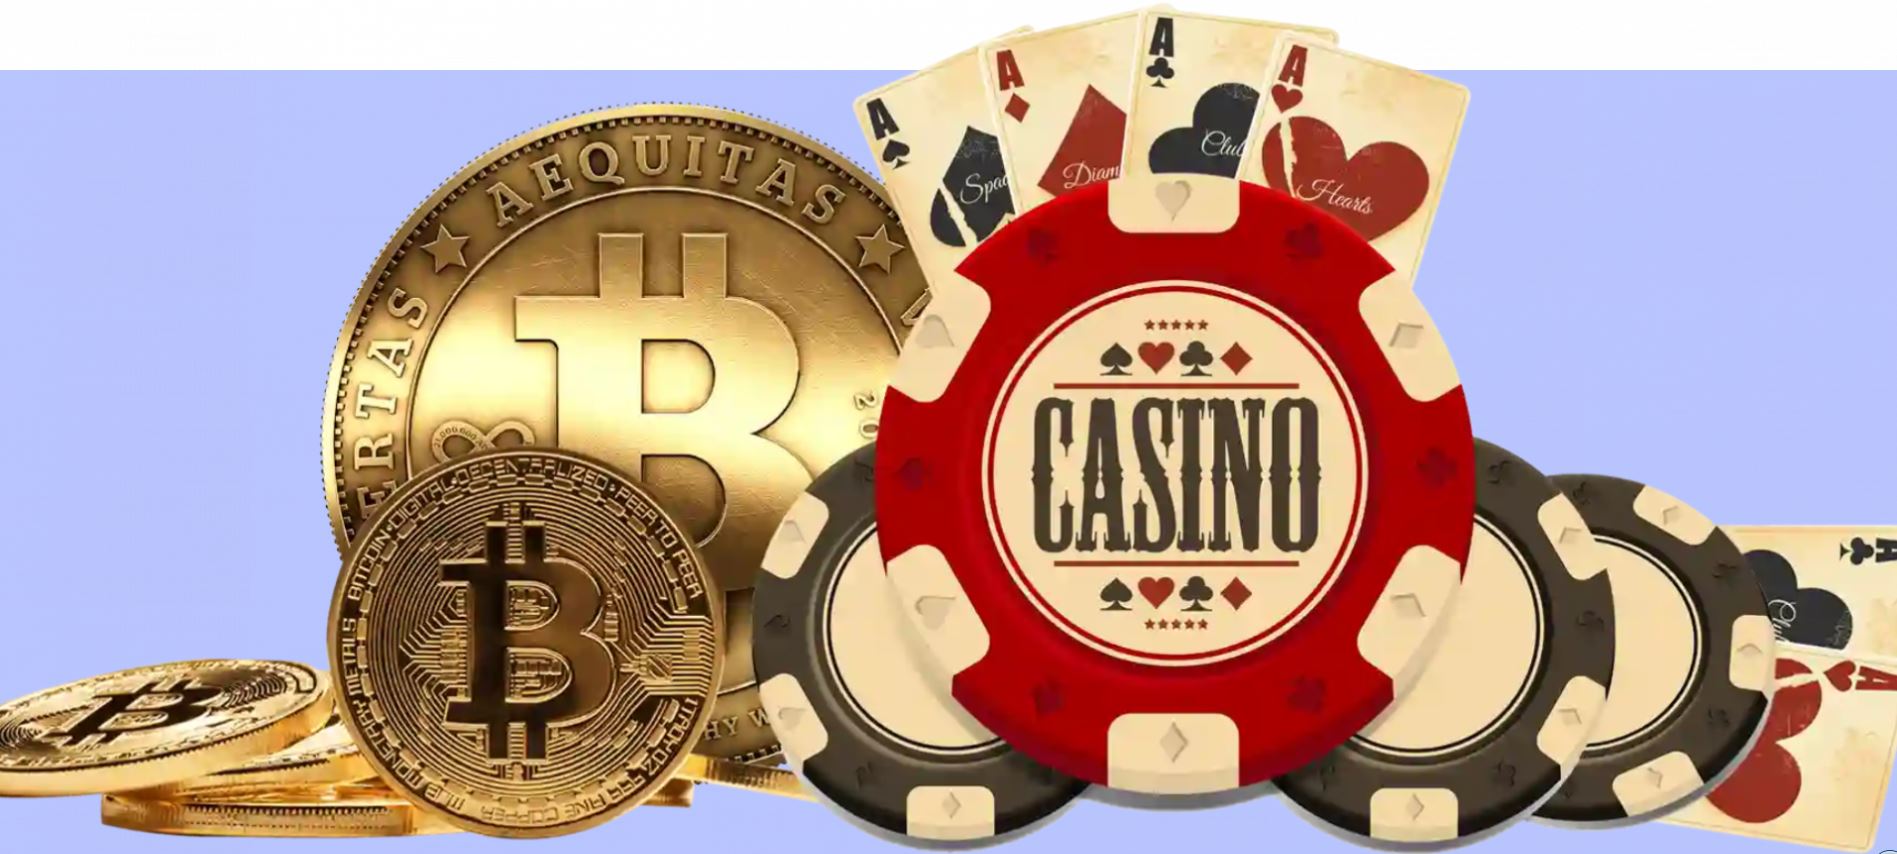 Bitcoin Casinos Advantages